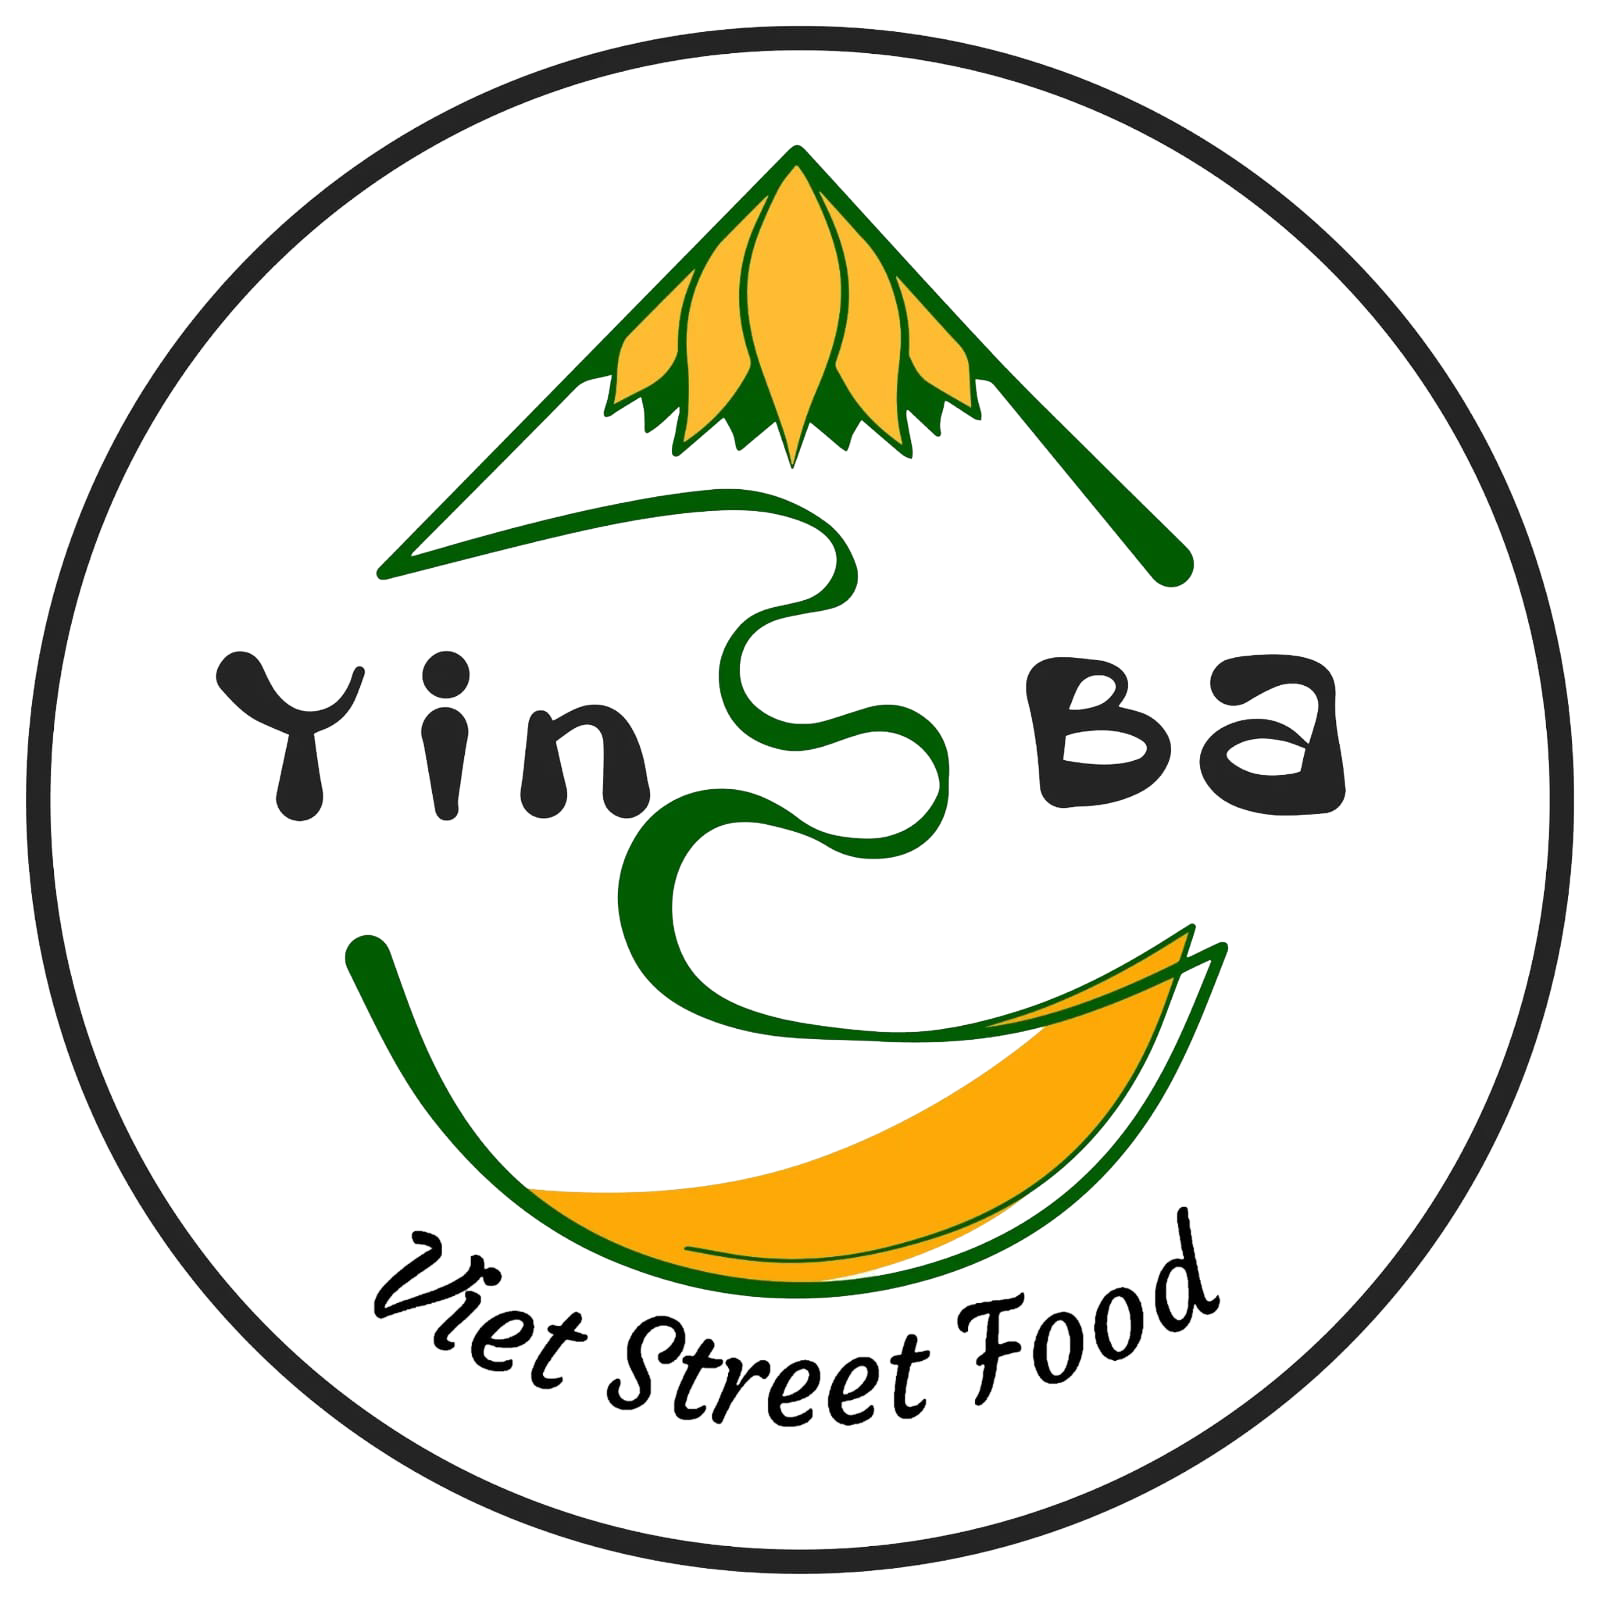 Yin Ba – Viet Street Food